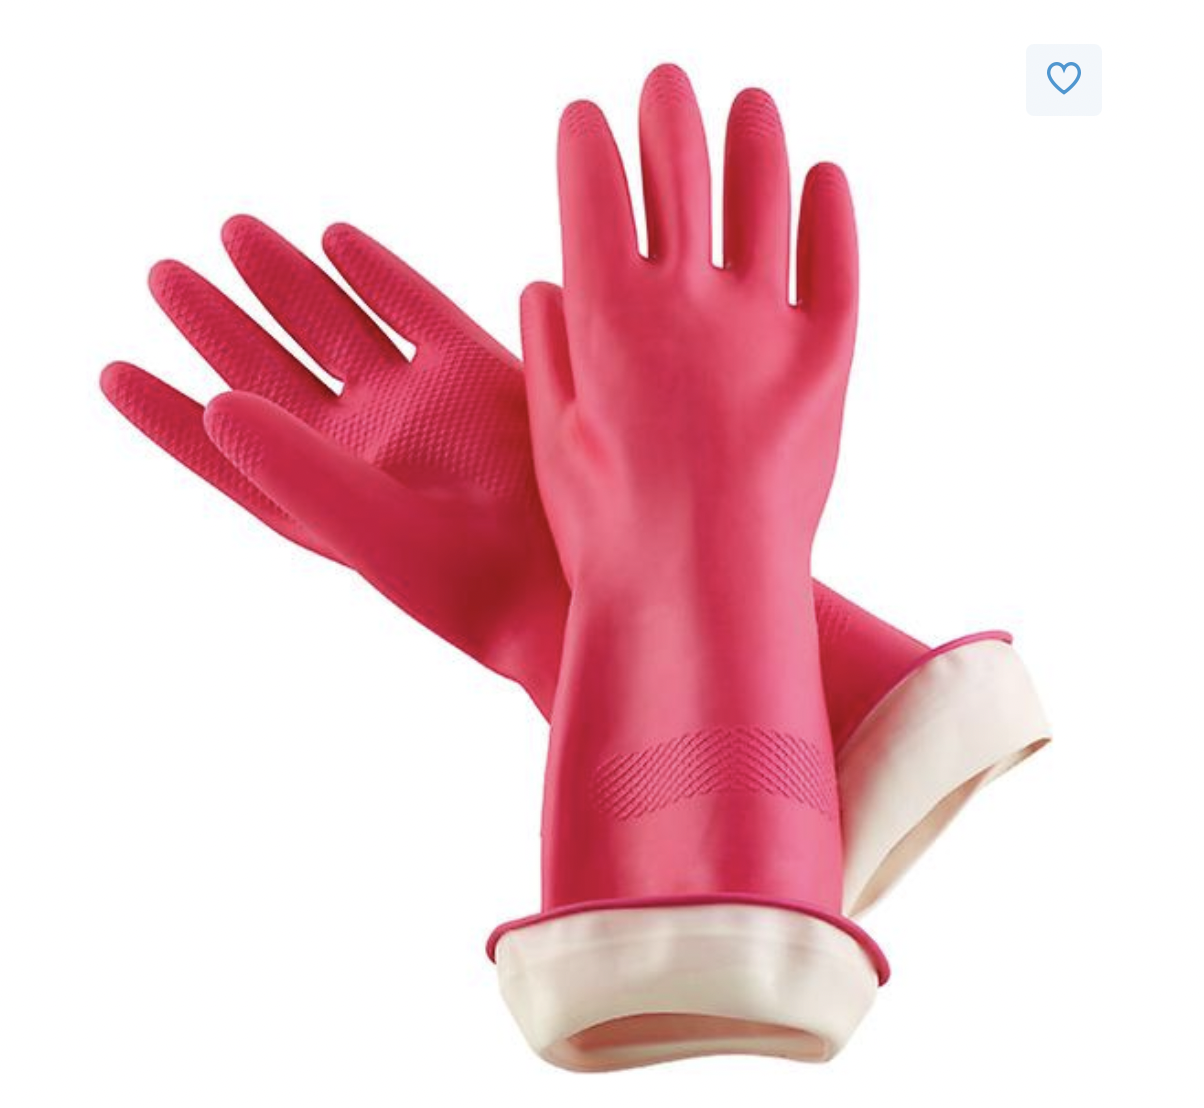 Casabella Small WaterBlock Gloves - $9.99